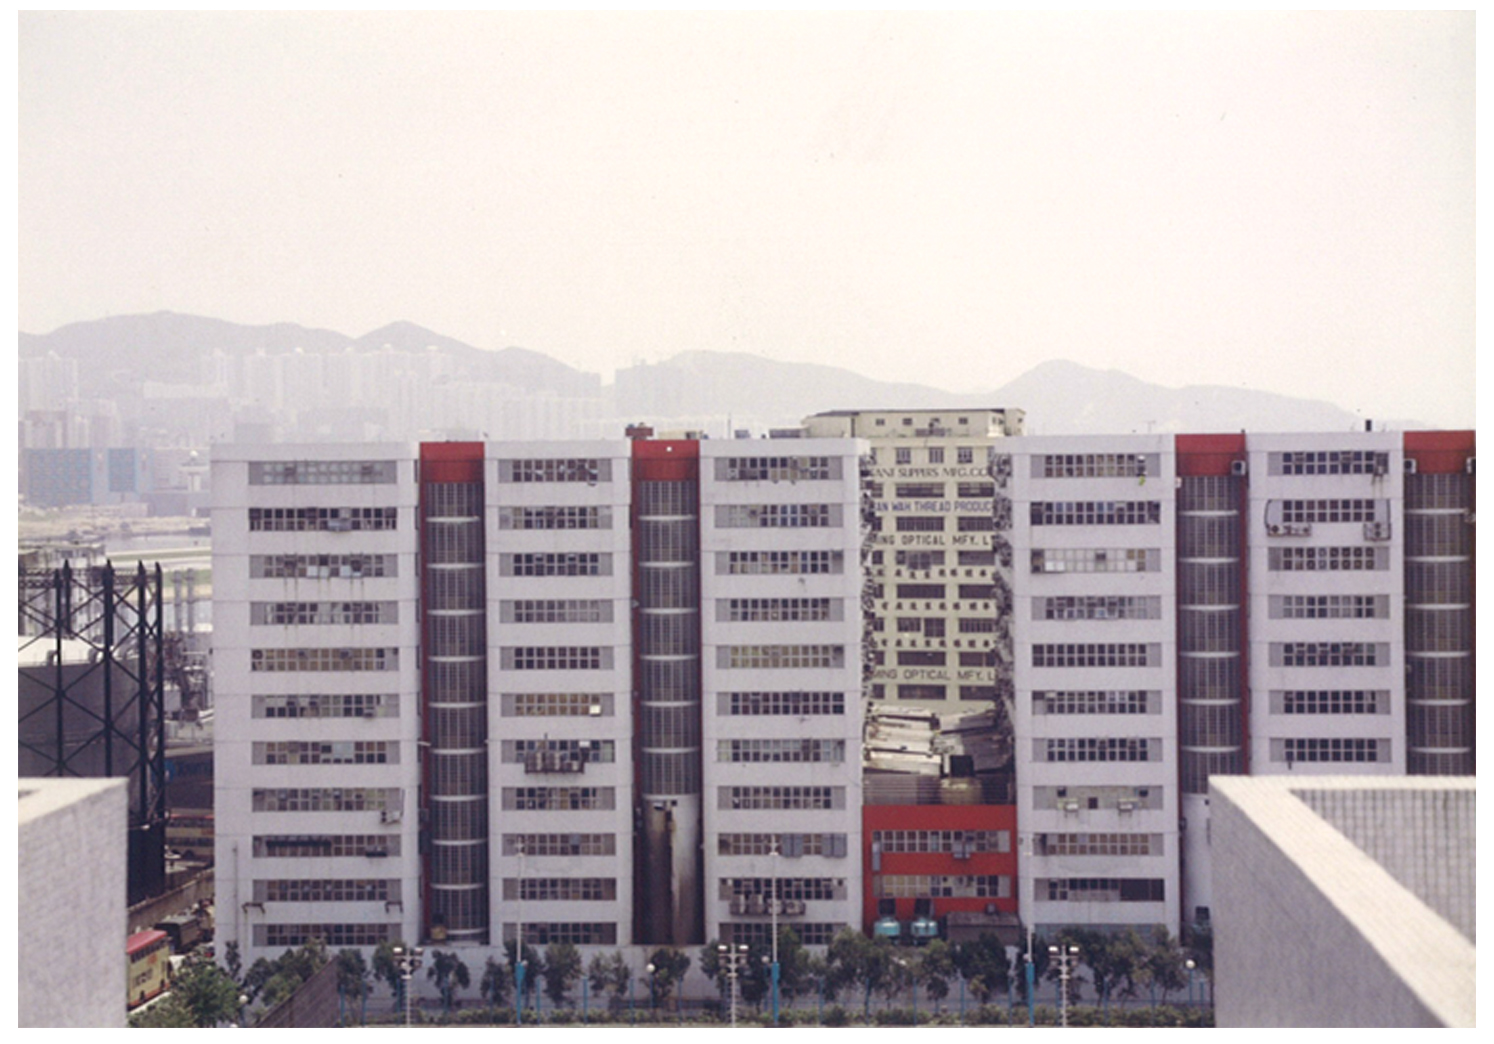 Outside view of Merit Industrial building, located in Tokwawan, Hong Kong